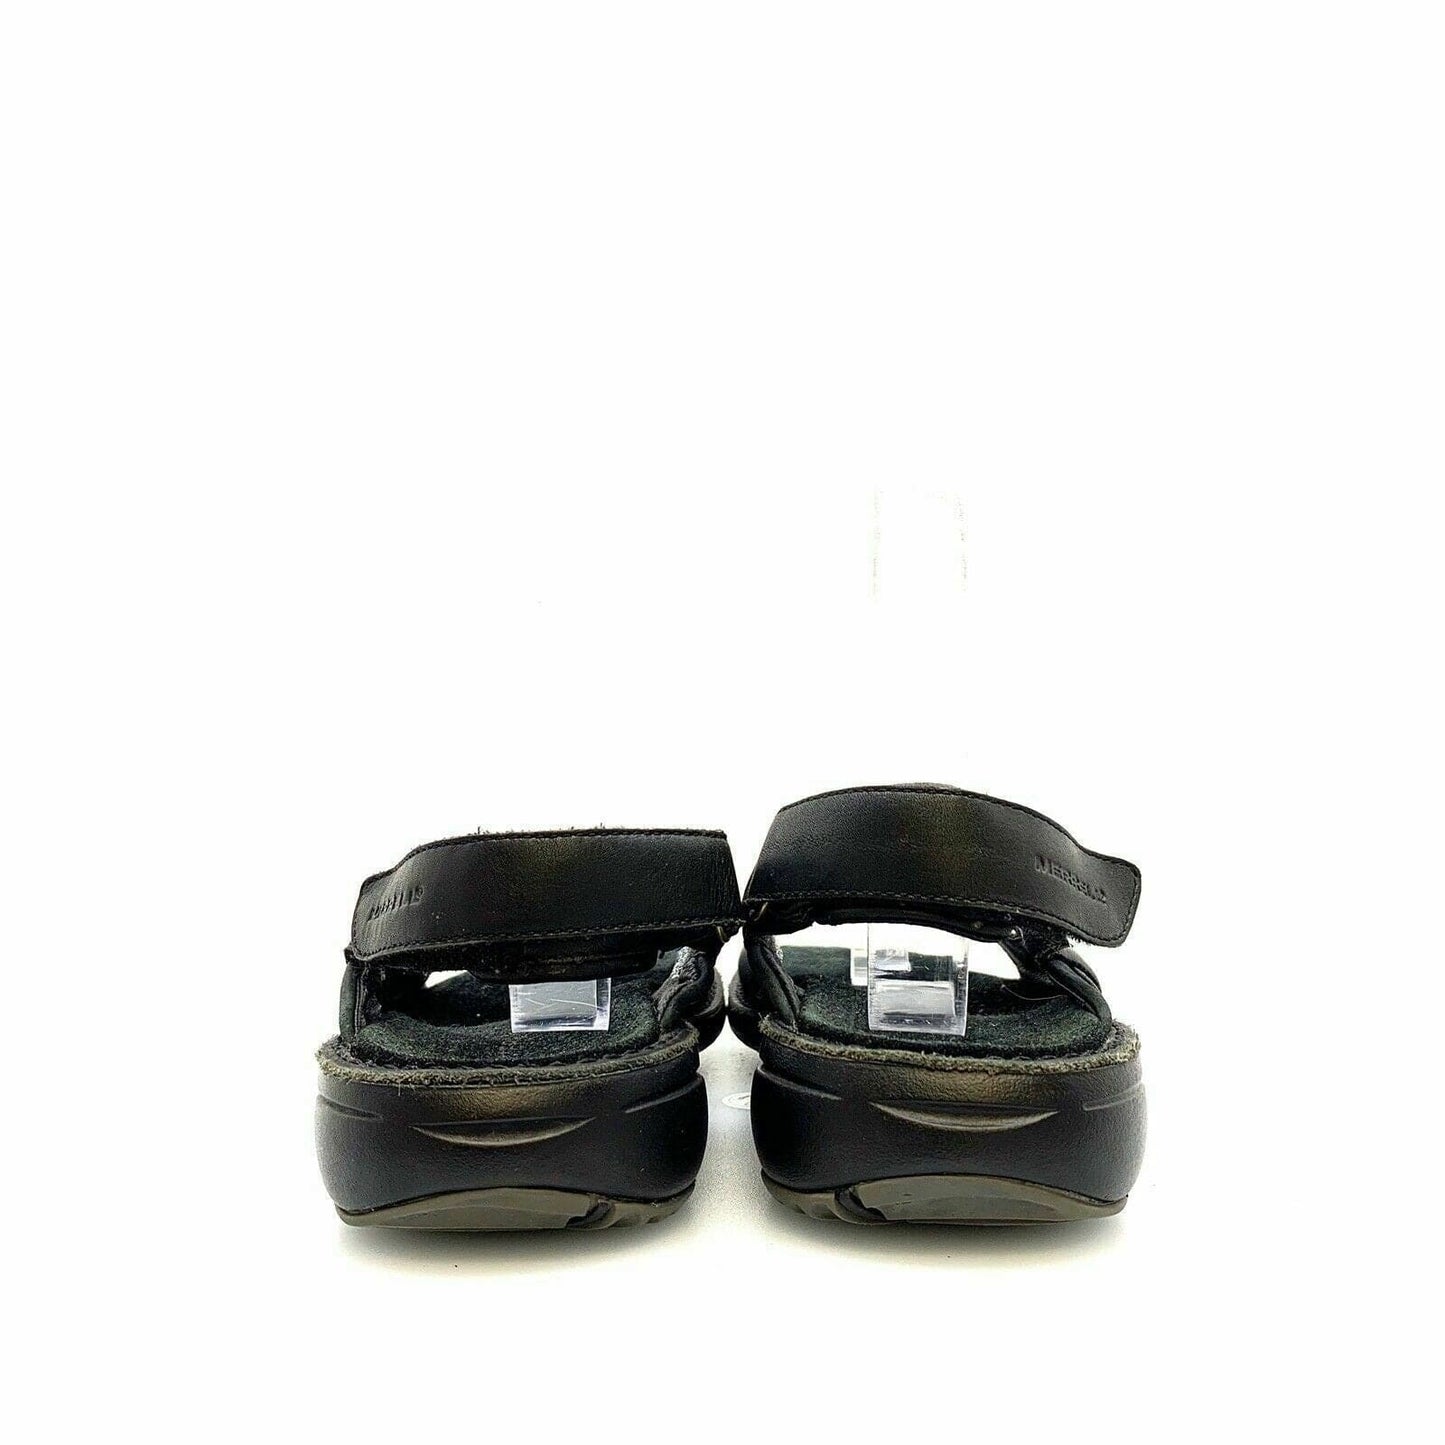 Merrell Womens Size 6 Black Sandals Tetra Slingback Saddle Leather Comfort Shoes